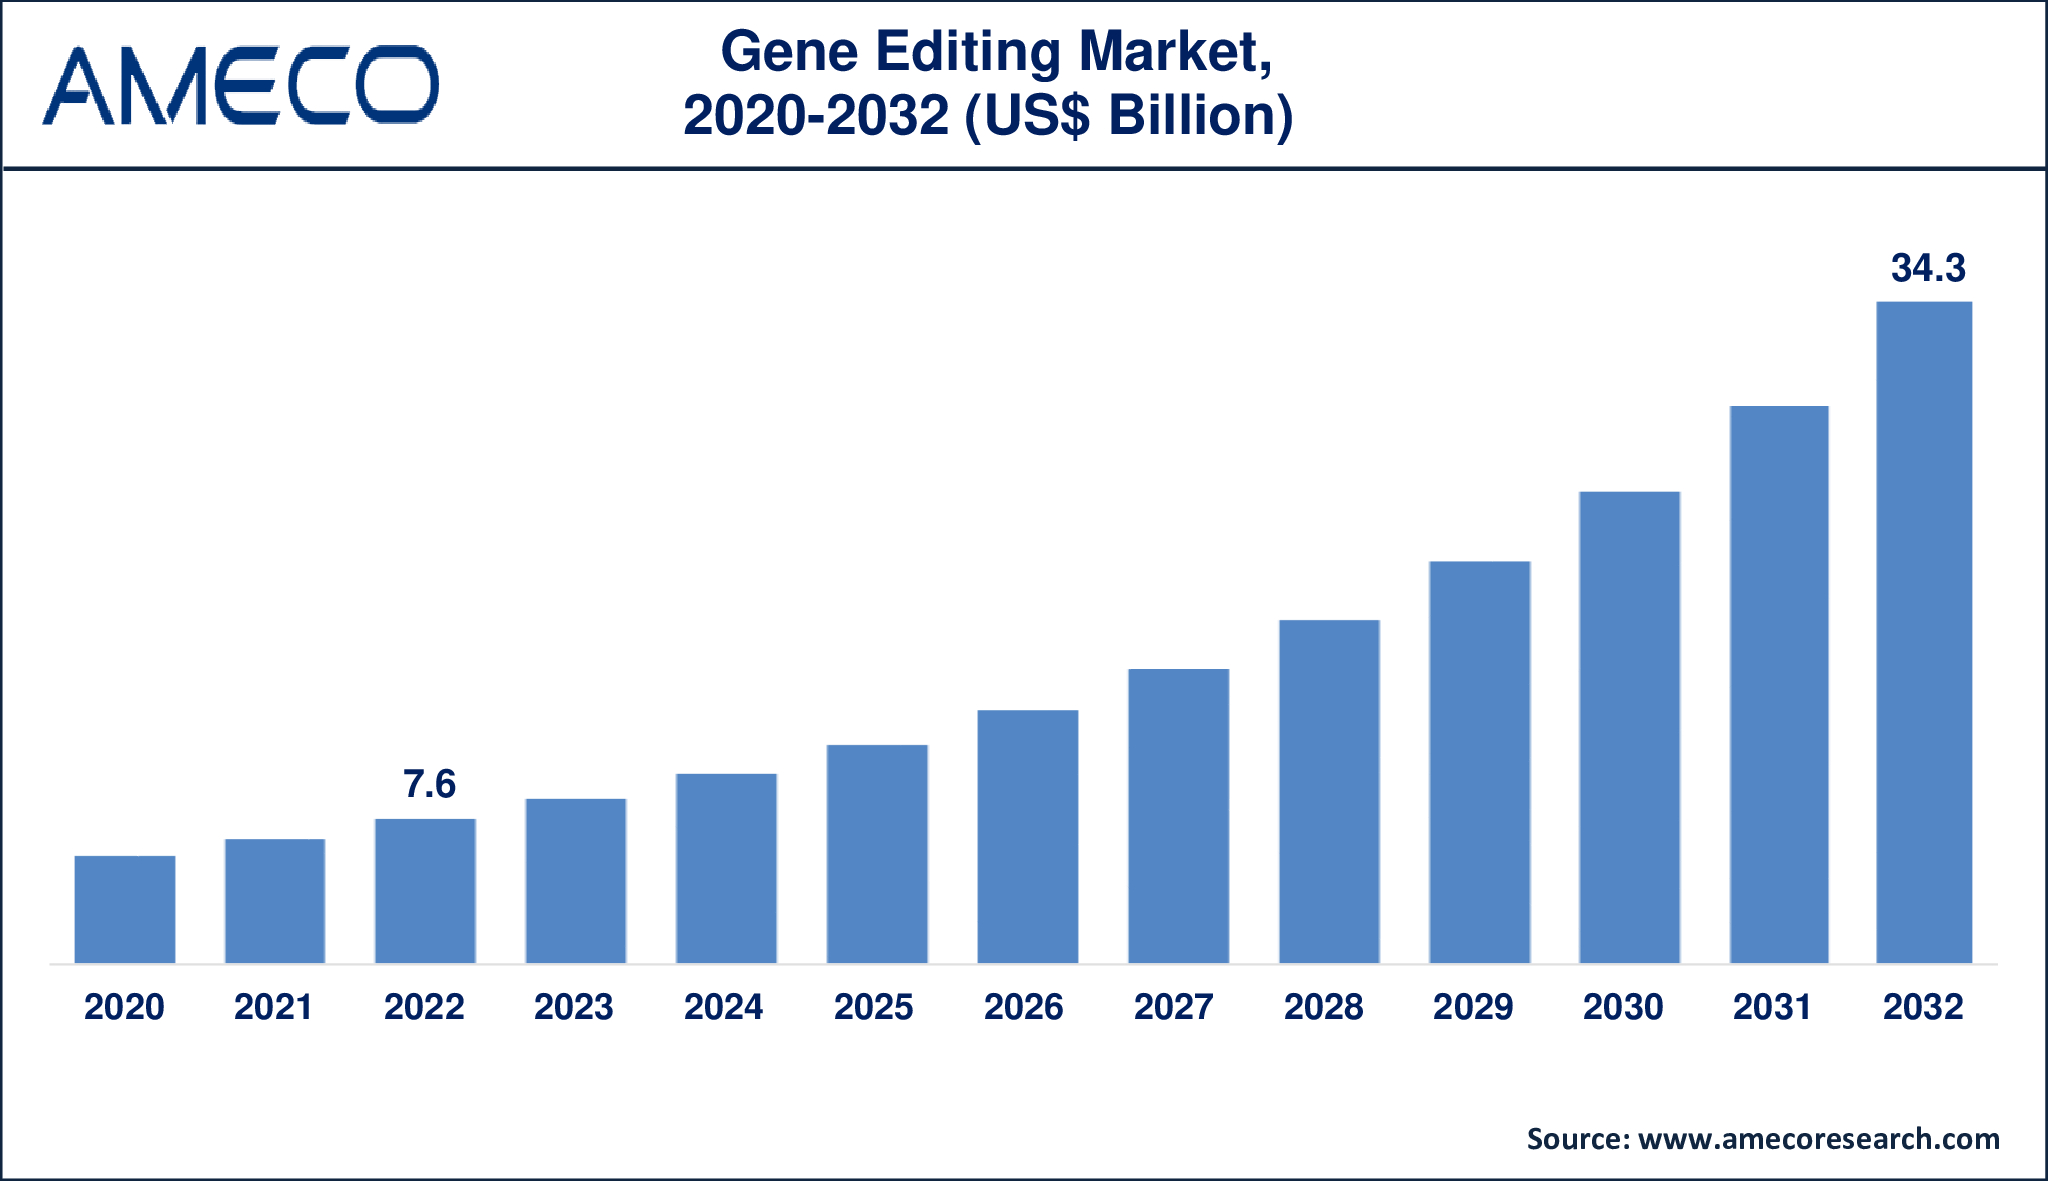 Gene Editing Market Dynamics